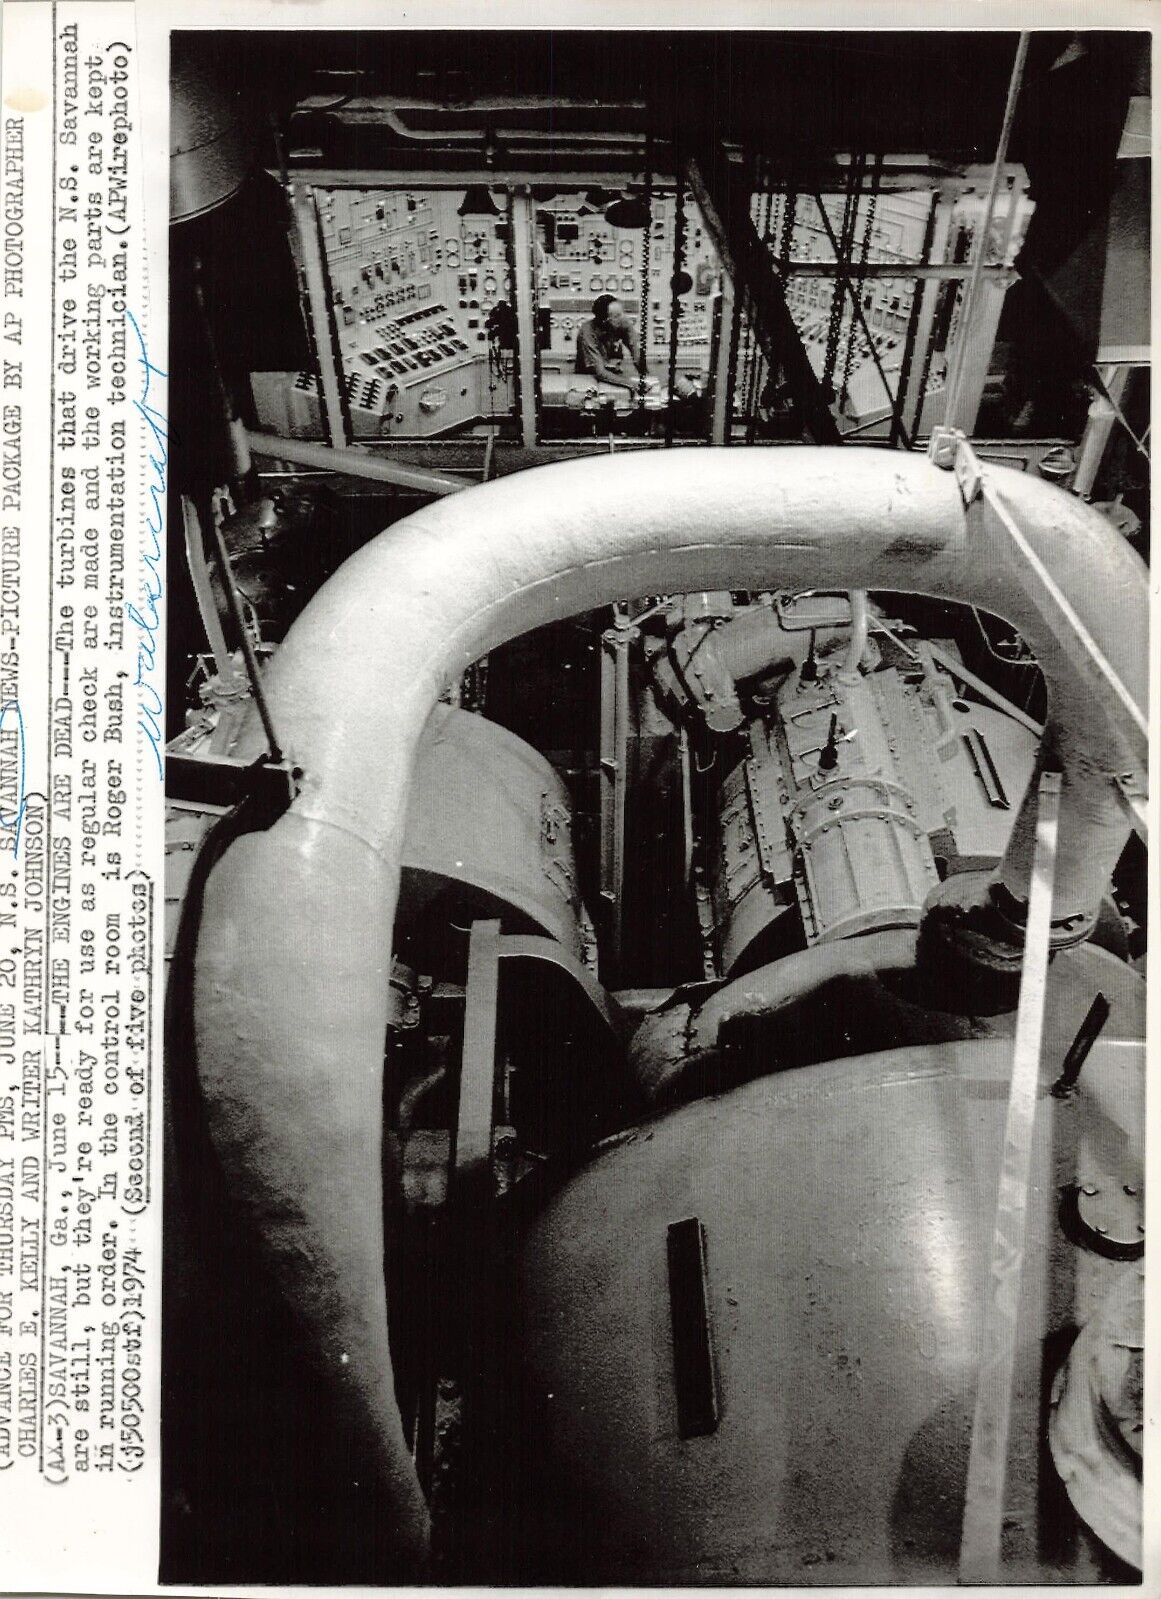 NS Savannah 1974 Press Photo Engine Room Roger Bush Nuclear Marine Ship *P131a